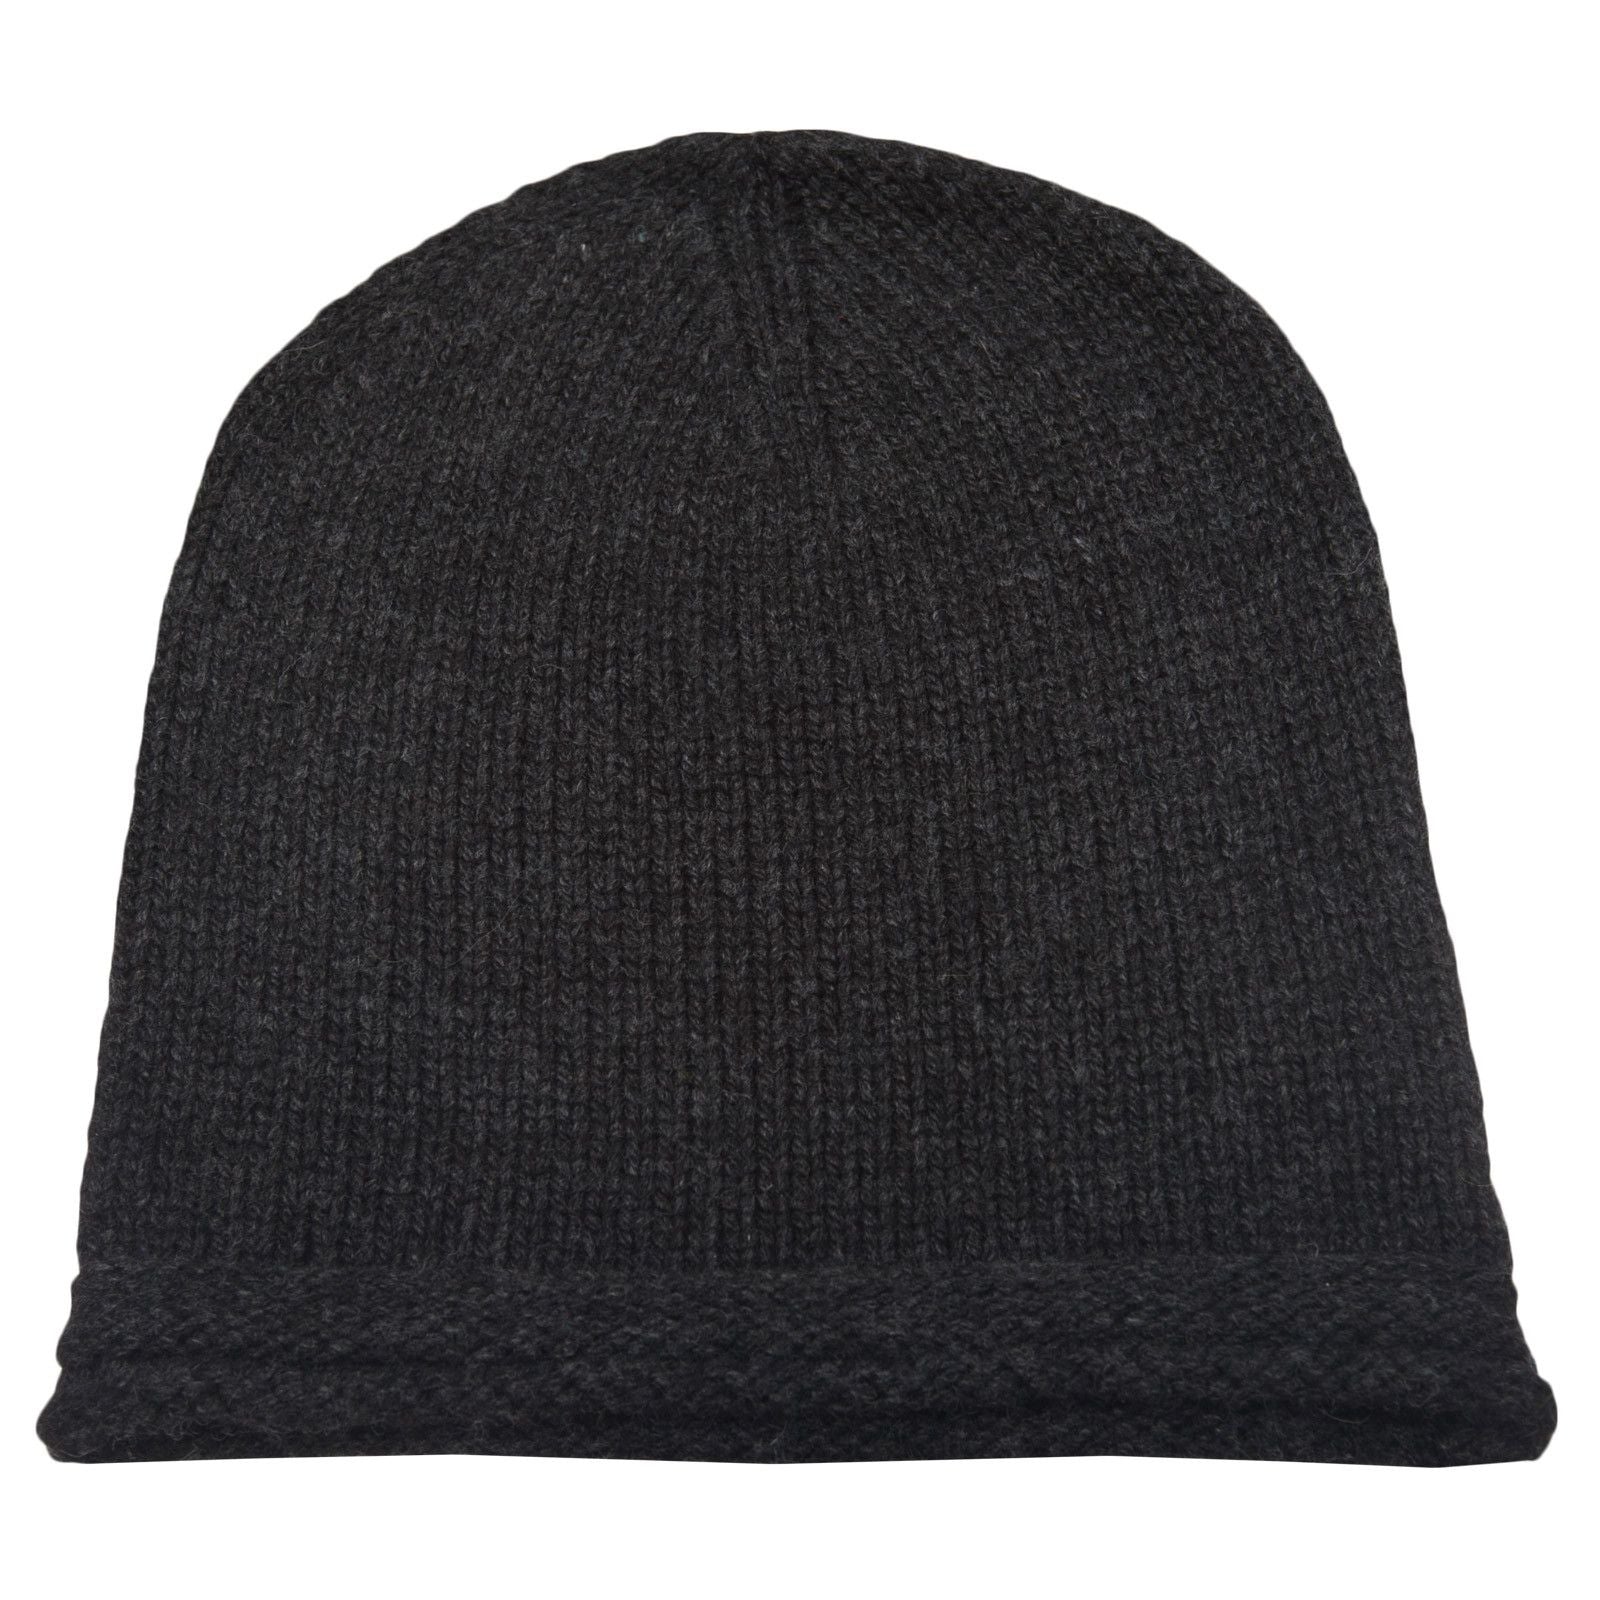 Boys Black Knitted Wool Hat - CÉMAROSE | Children's Fashion Store - 2